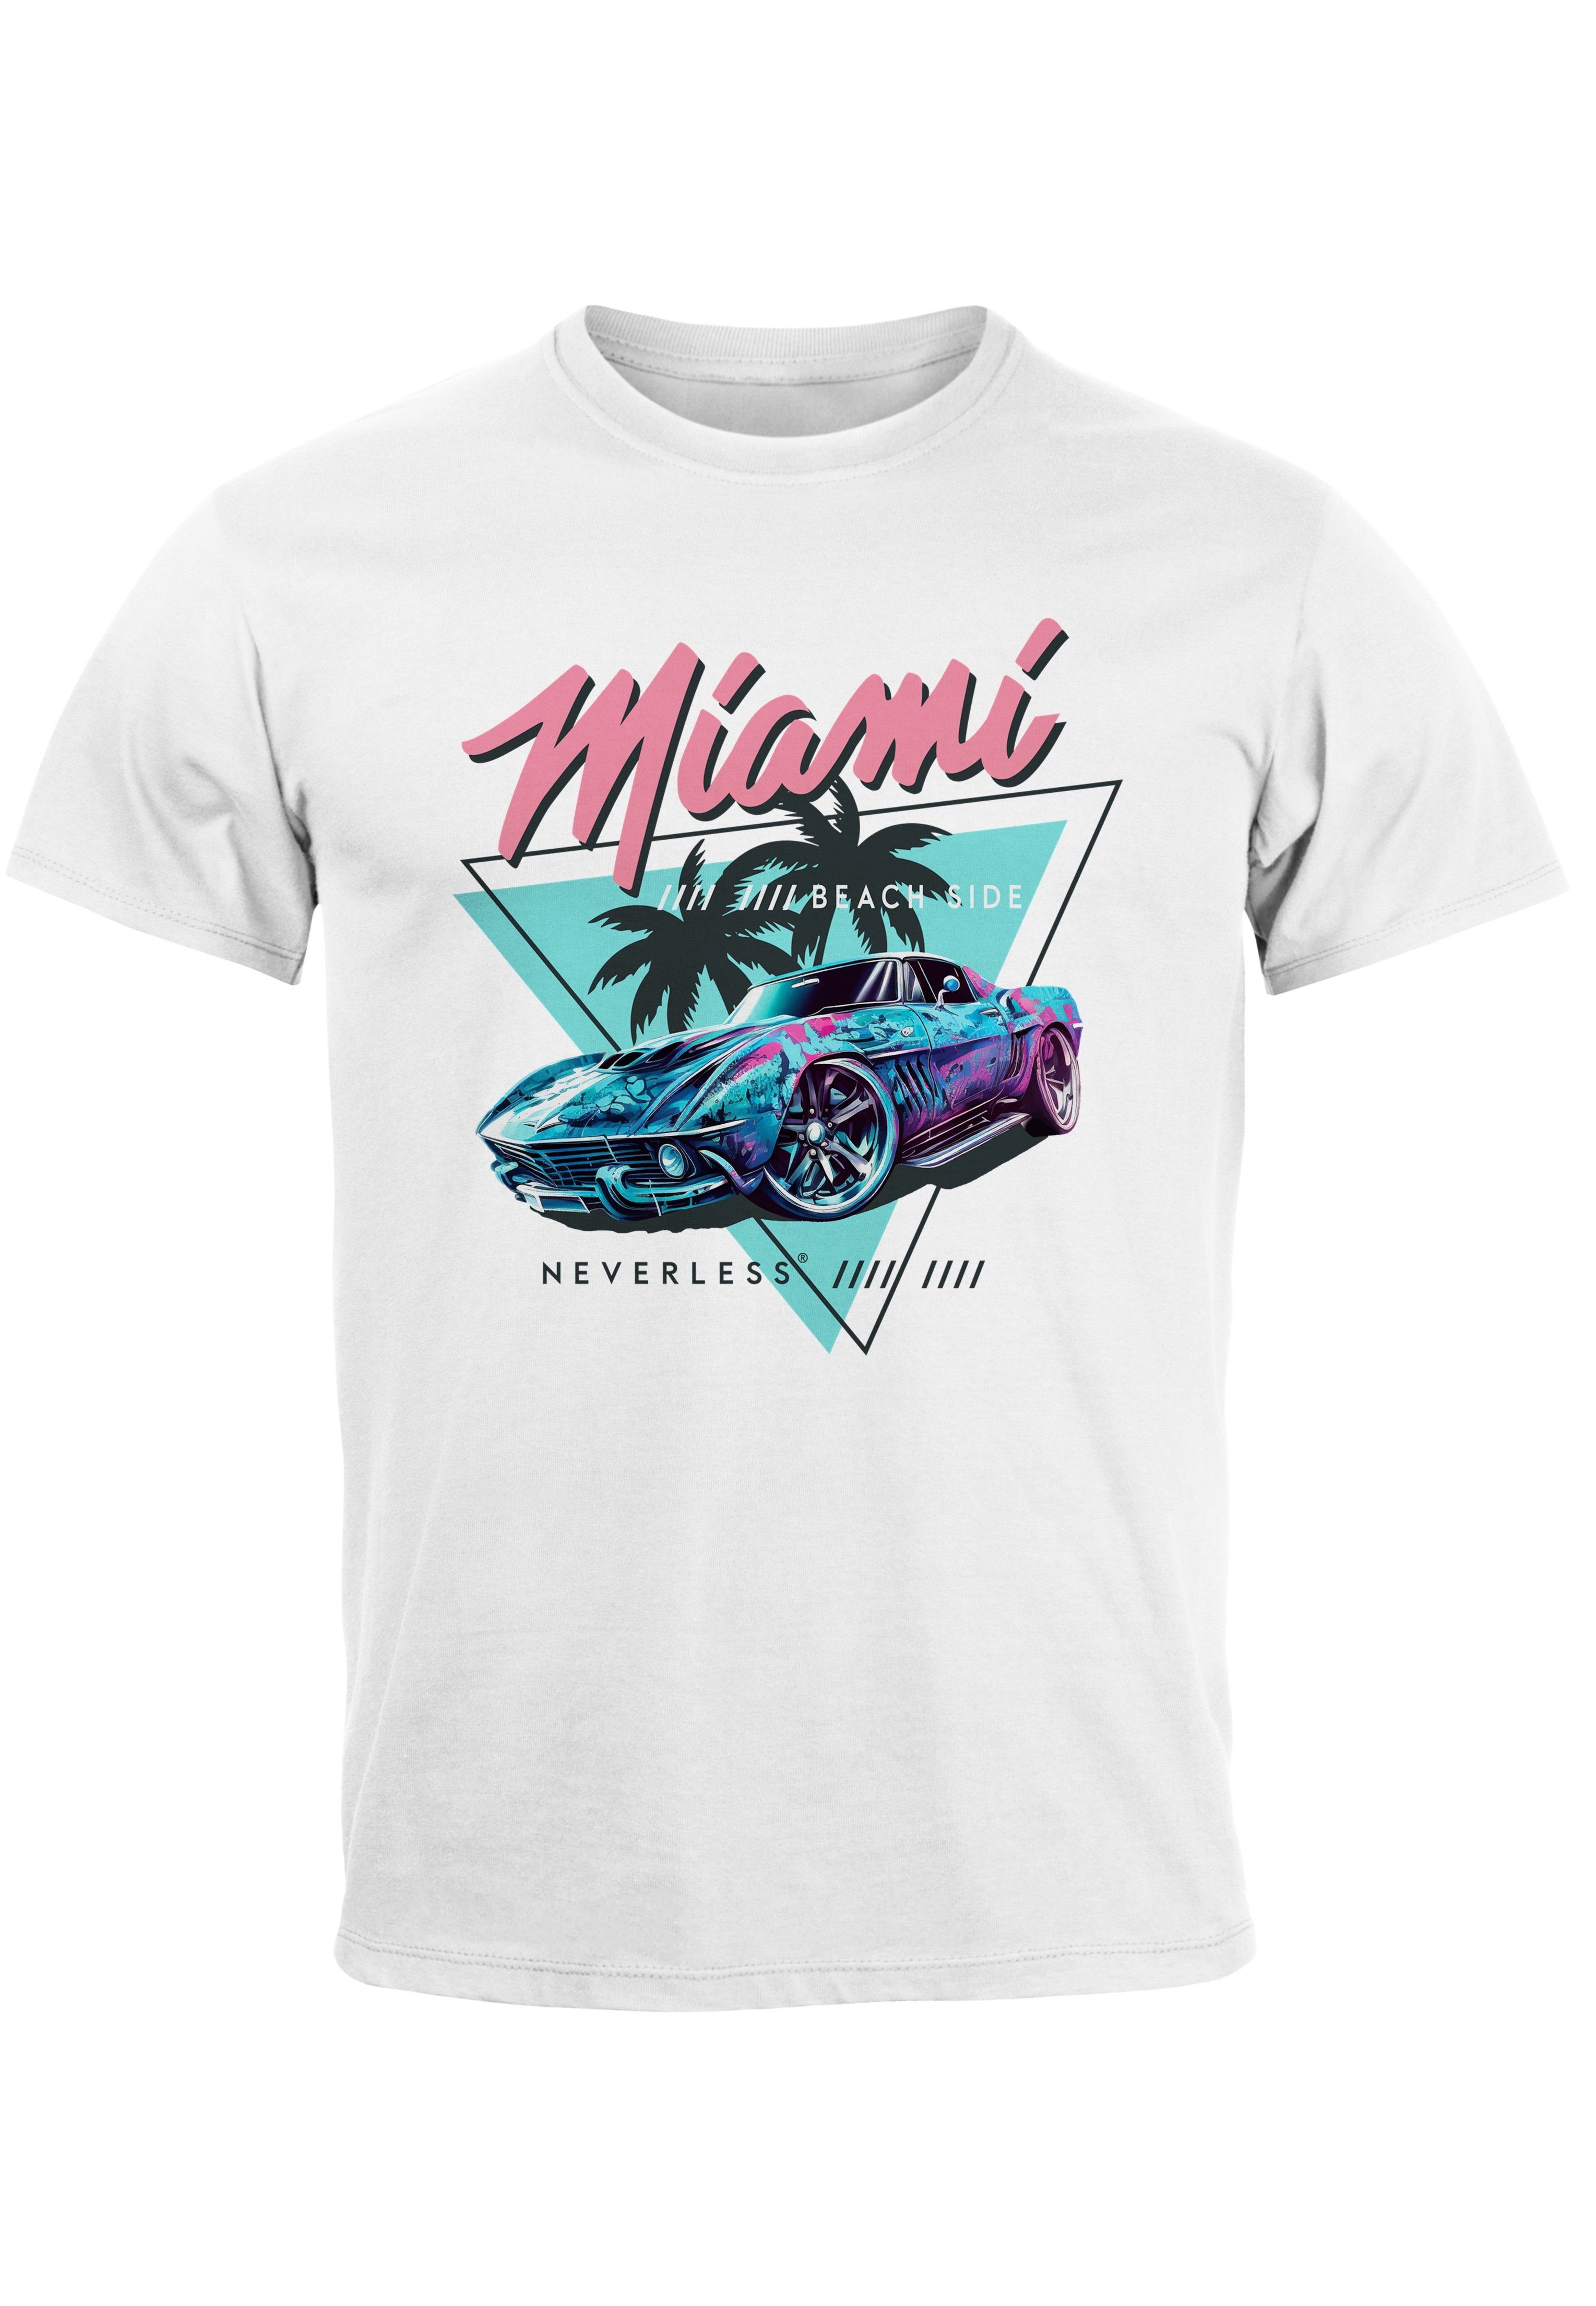 Beach mit T-Shirt Herren Surfing Print weiß Retro USA Neverless Bedruckt Miami Automobil Motiv Print-Shirt